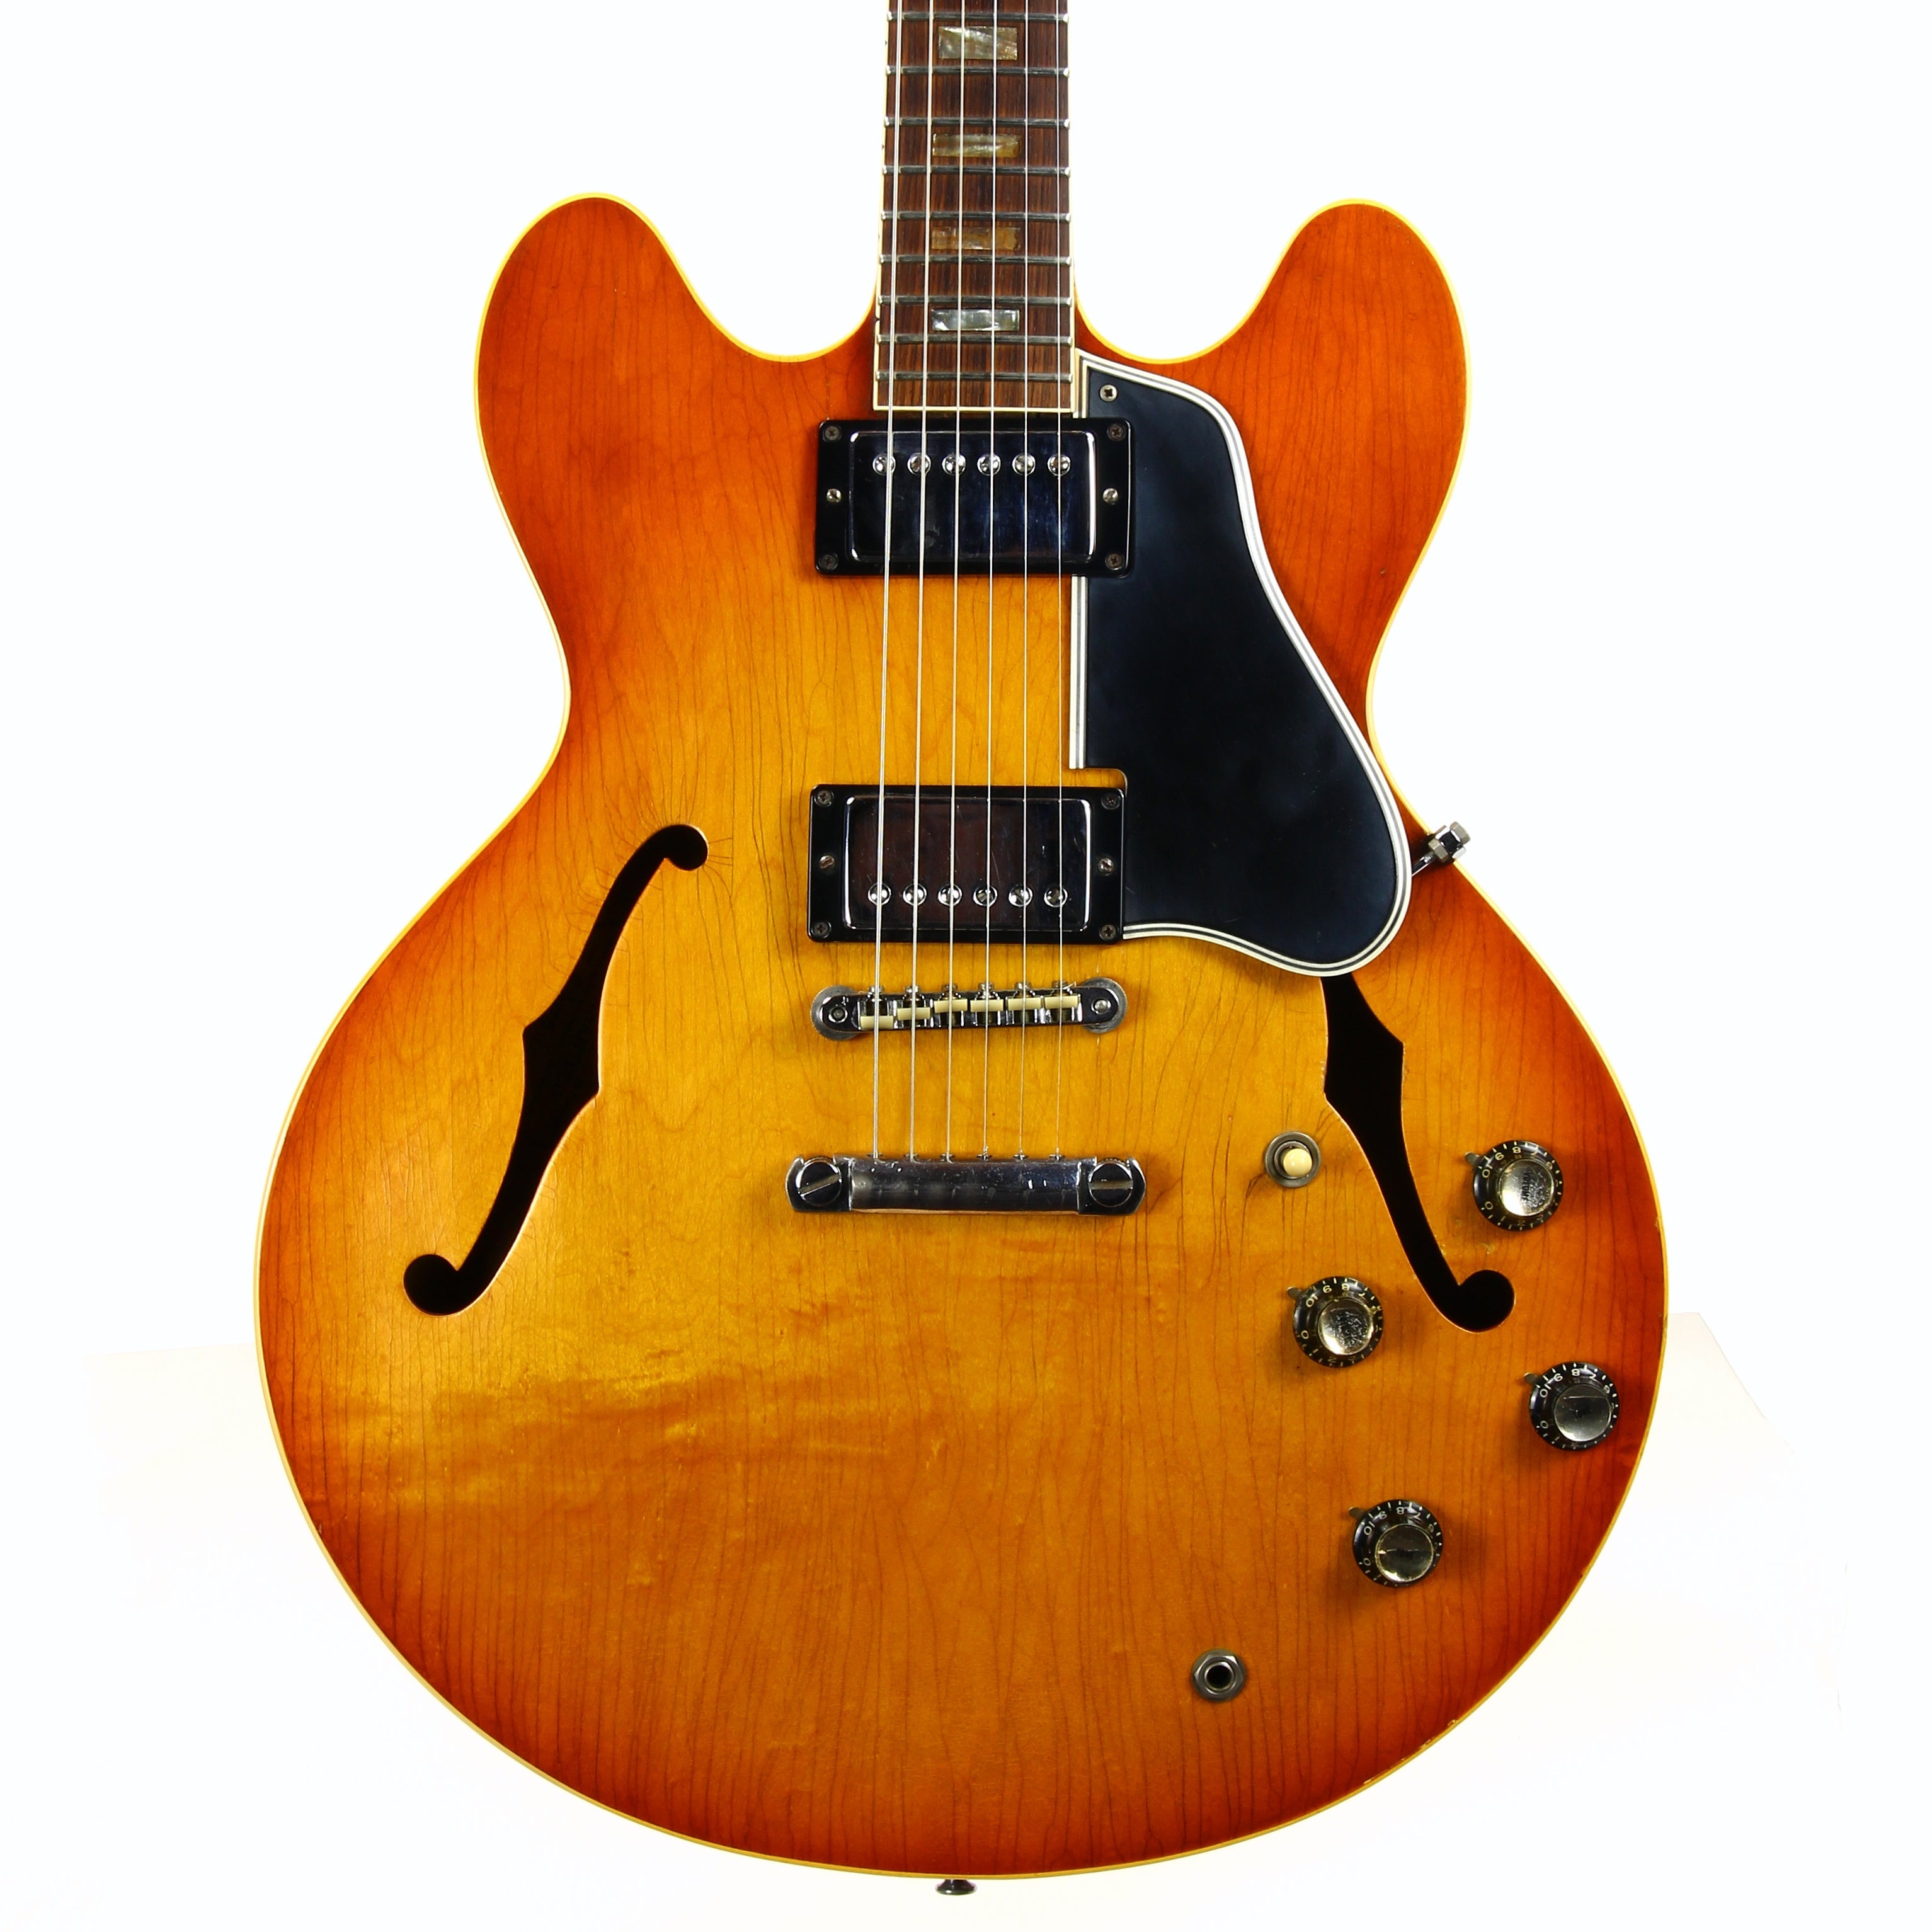 *SOLD*  1965 Gibson ES-335 TD w/ Original Case - WIDE 1964 NUT, 2 PAT # PAF's, No Breaks!